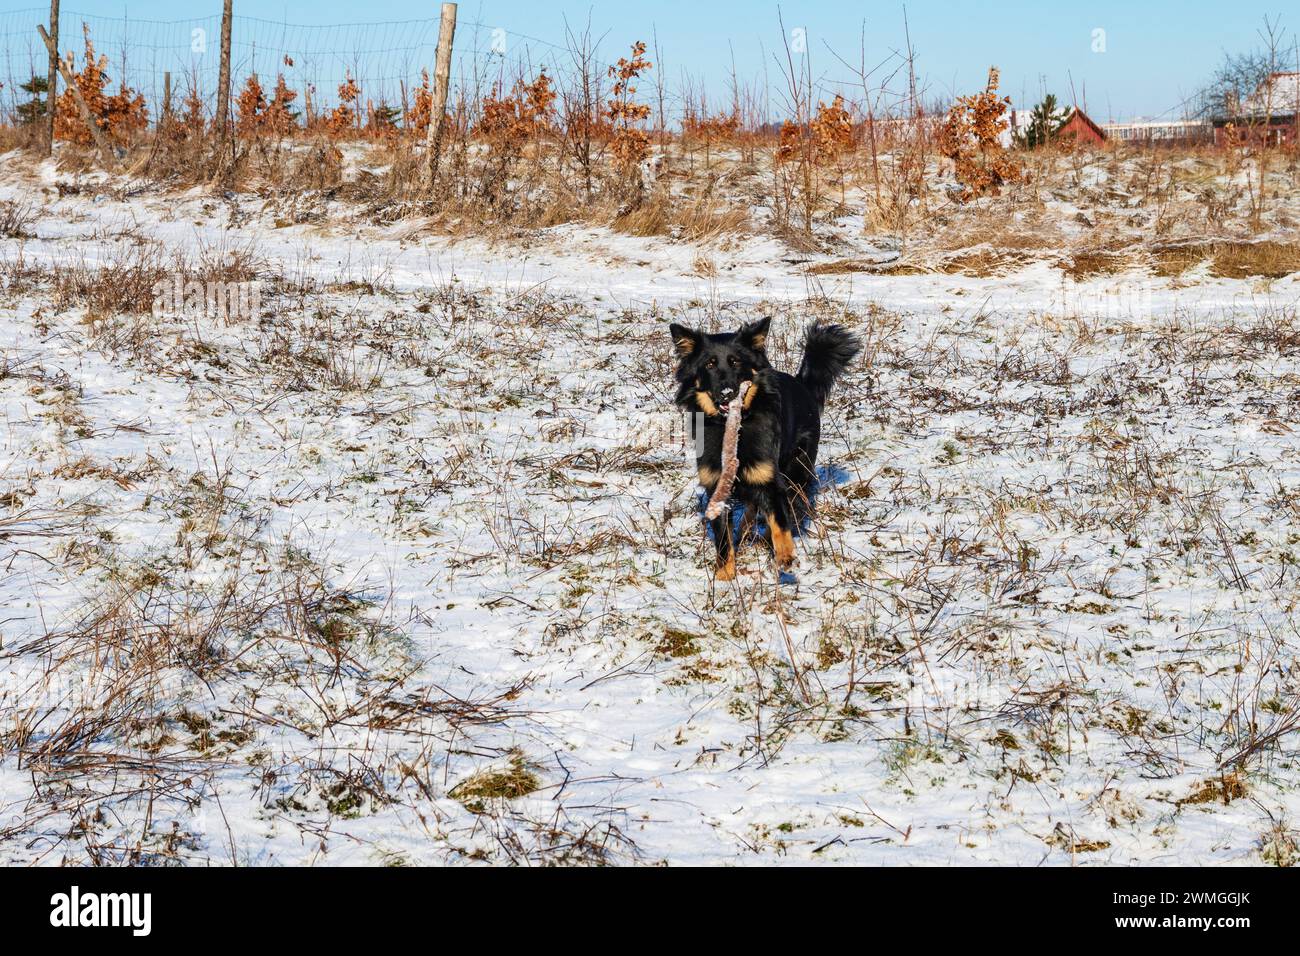 Lindo perro negro joven (pastor bohemio) en prado nevado con palo en la boca. Foto de stock